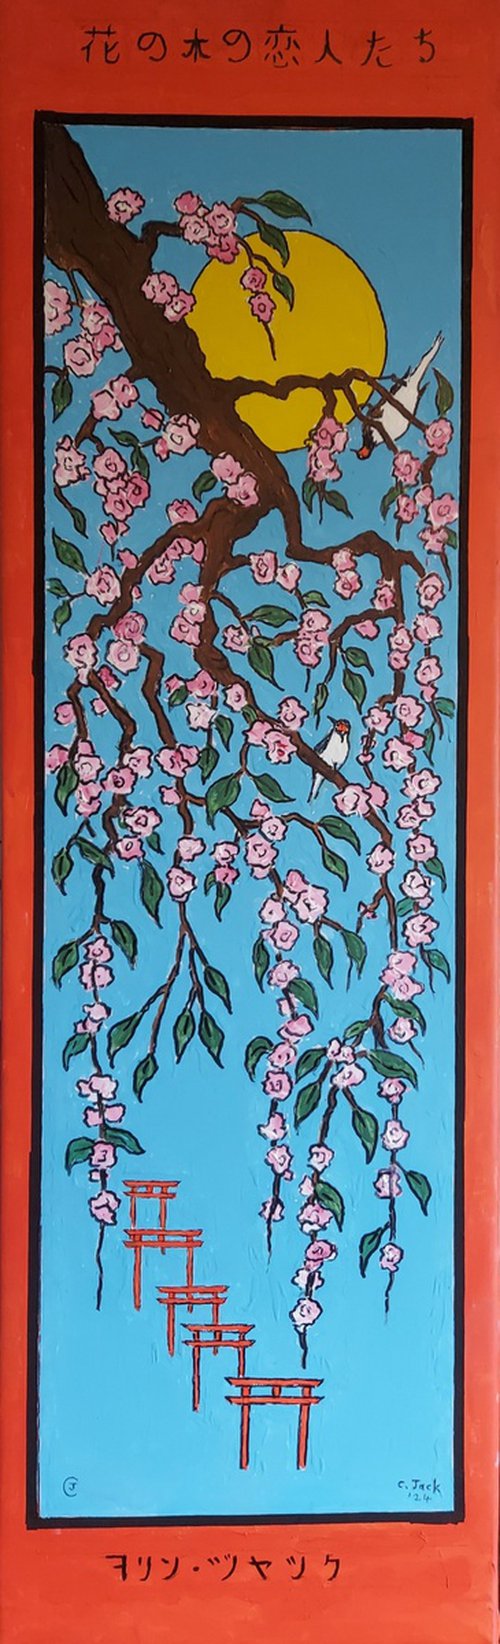 lovebirds in blossom tree by Colin Ross Jack